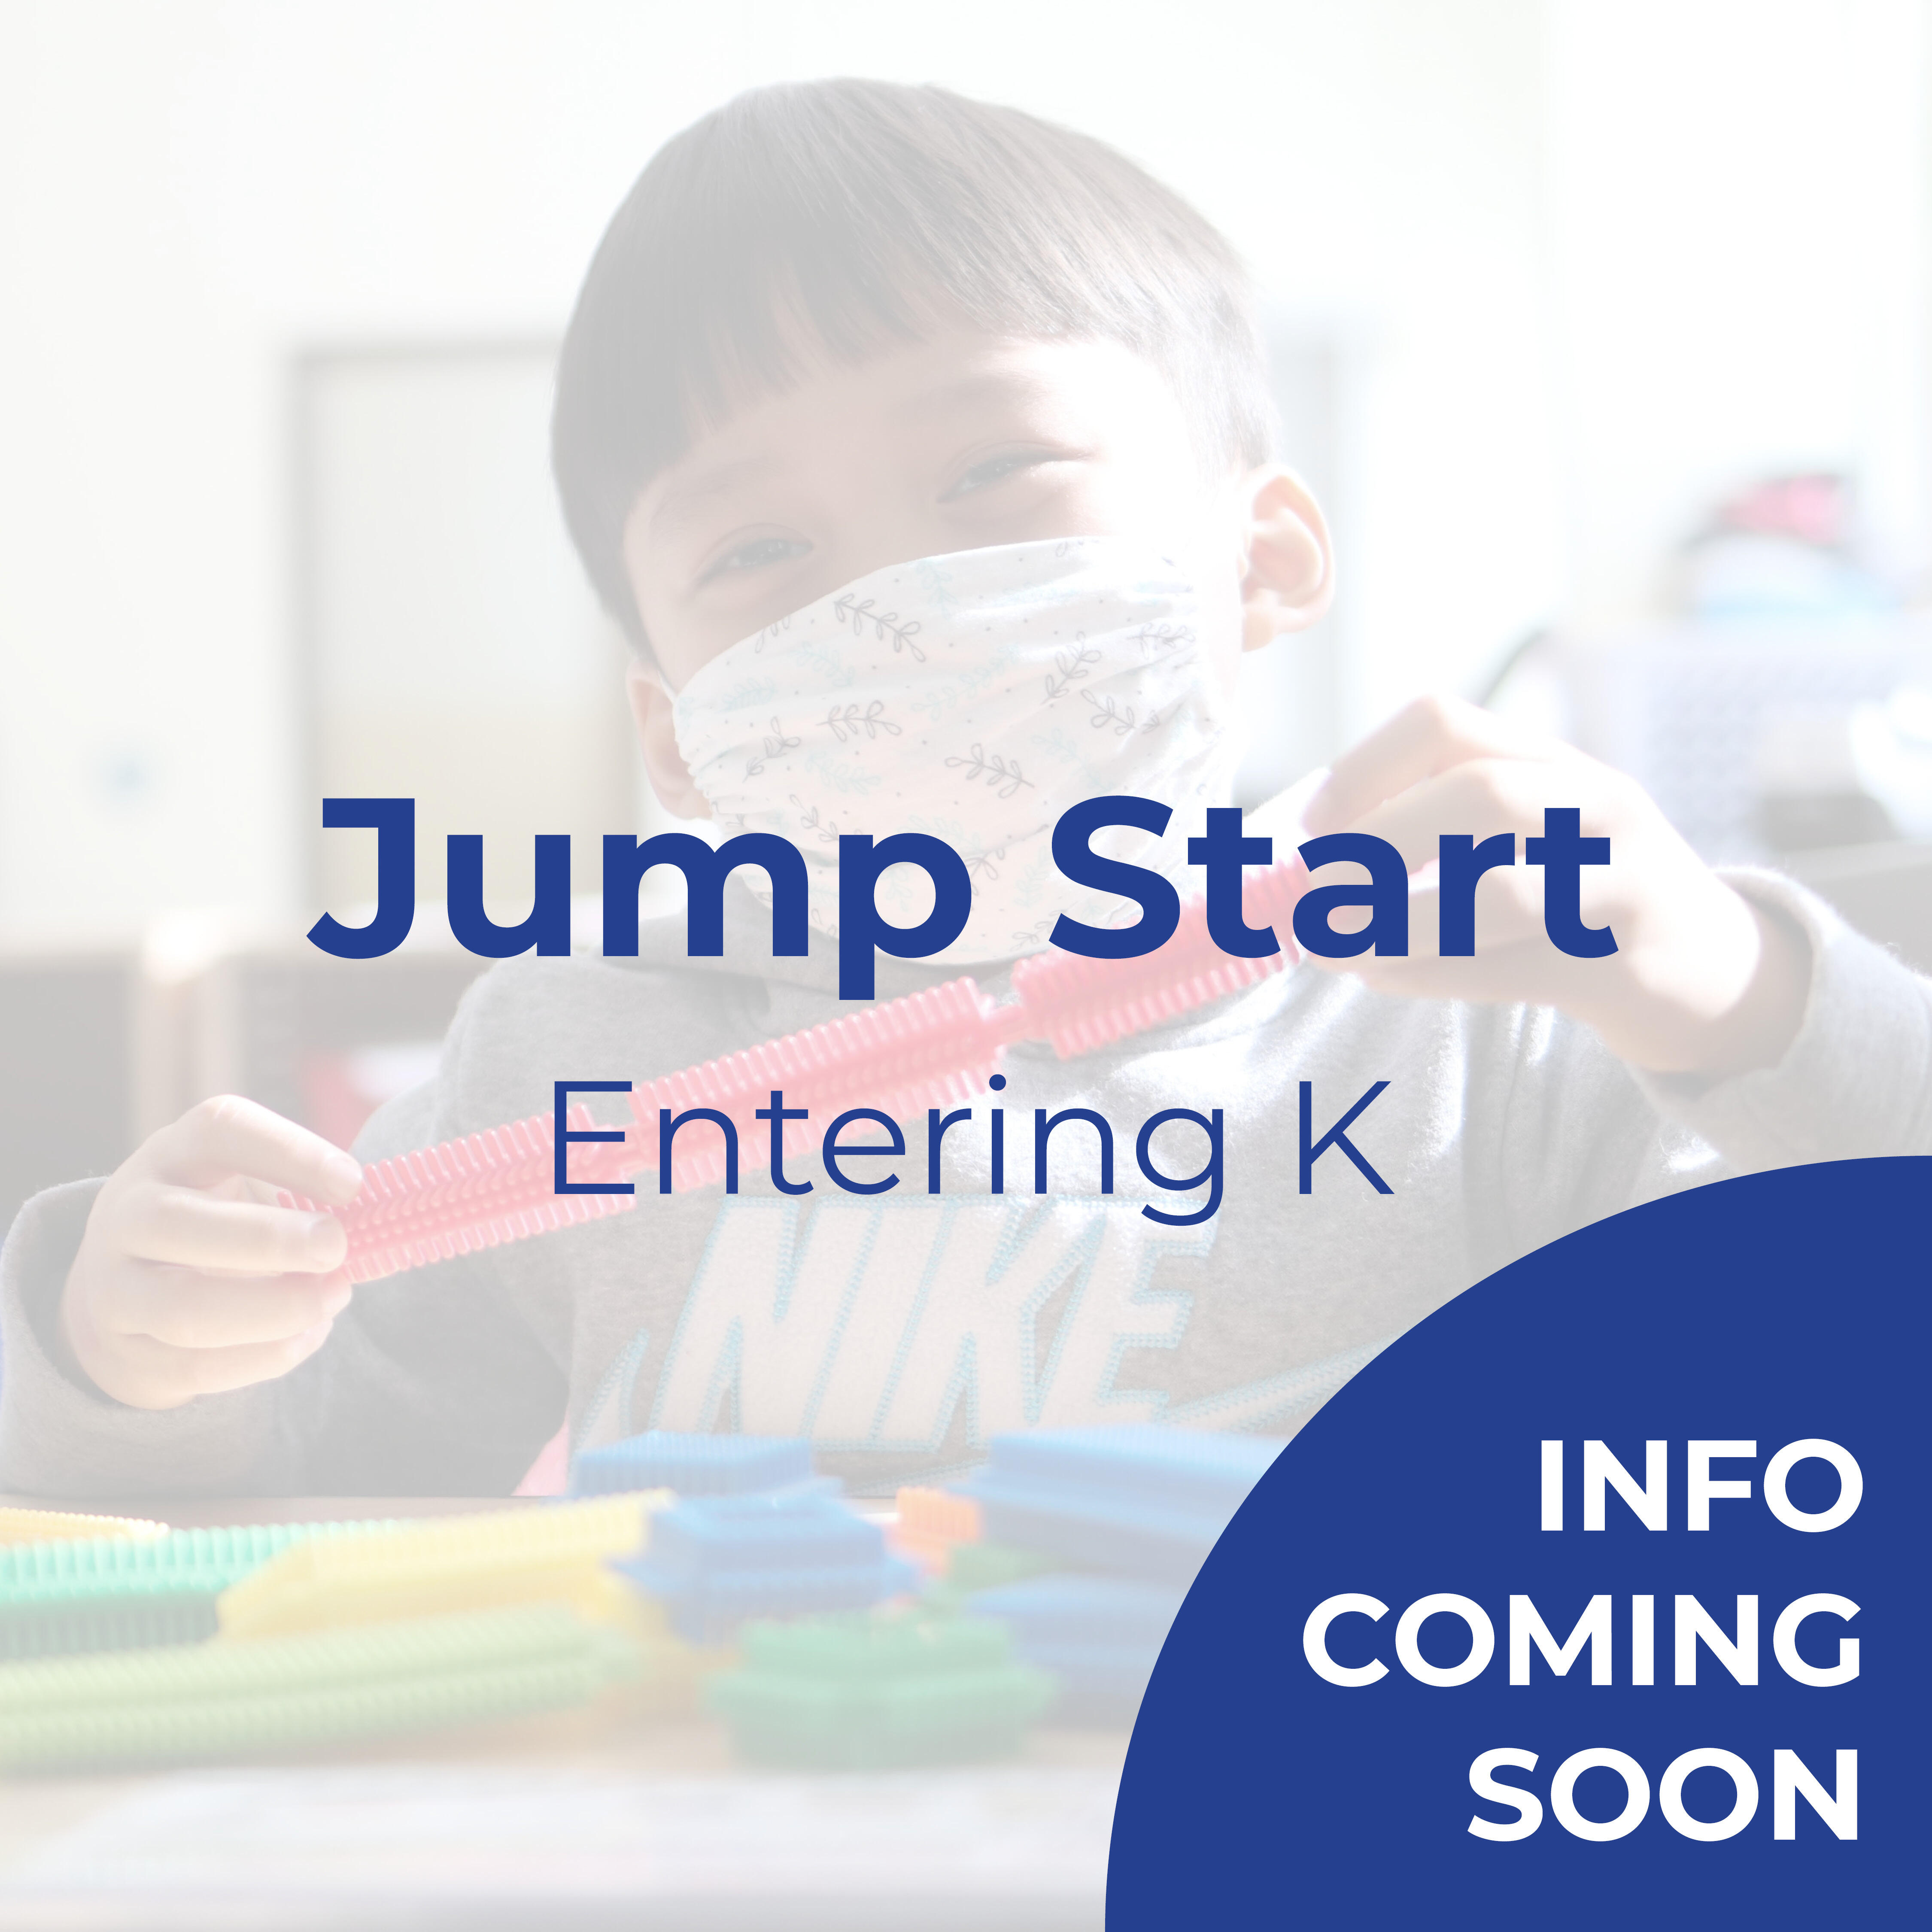 Text that reads "Jump Start: Entering K" 